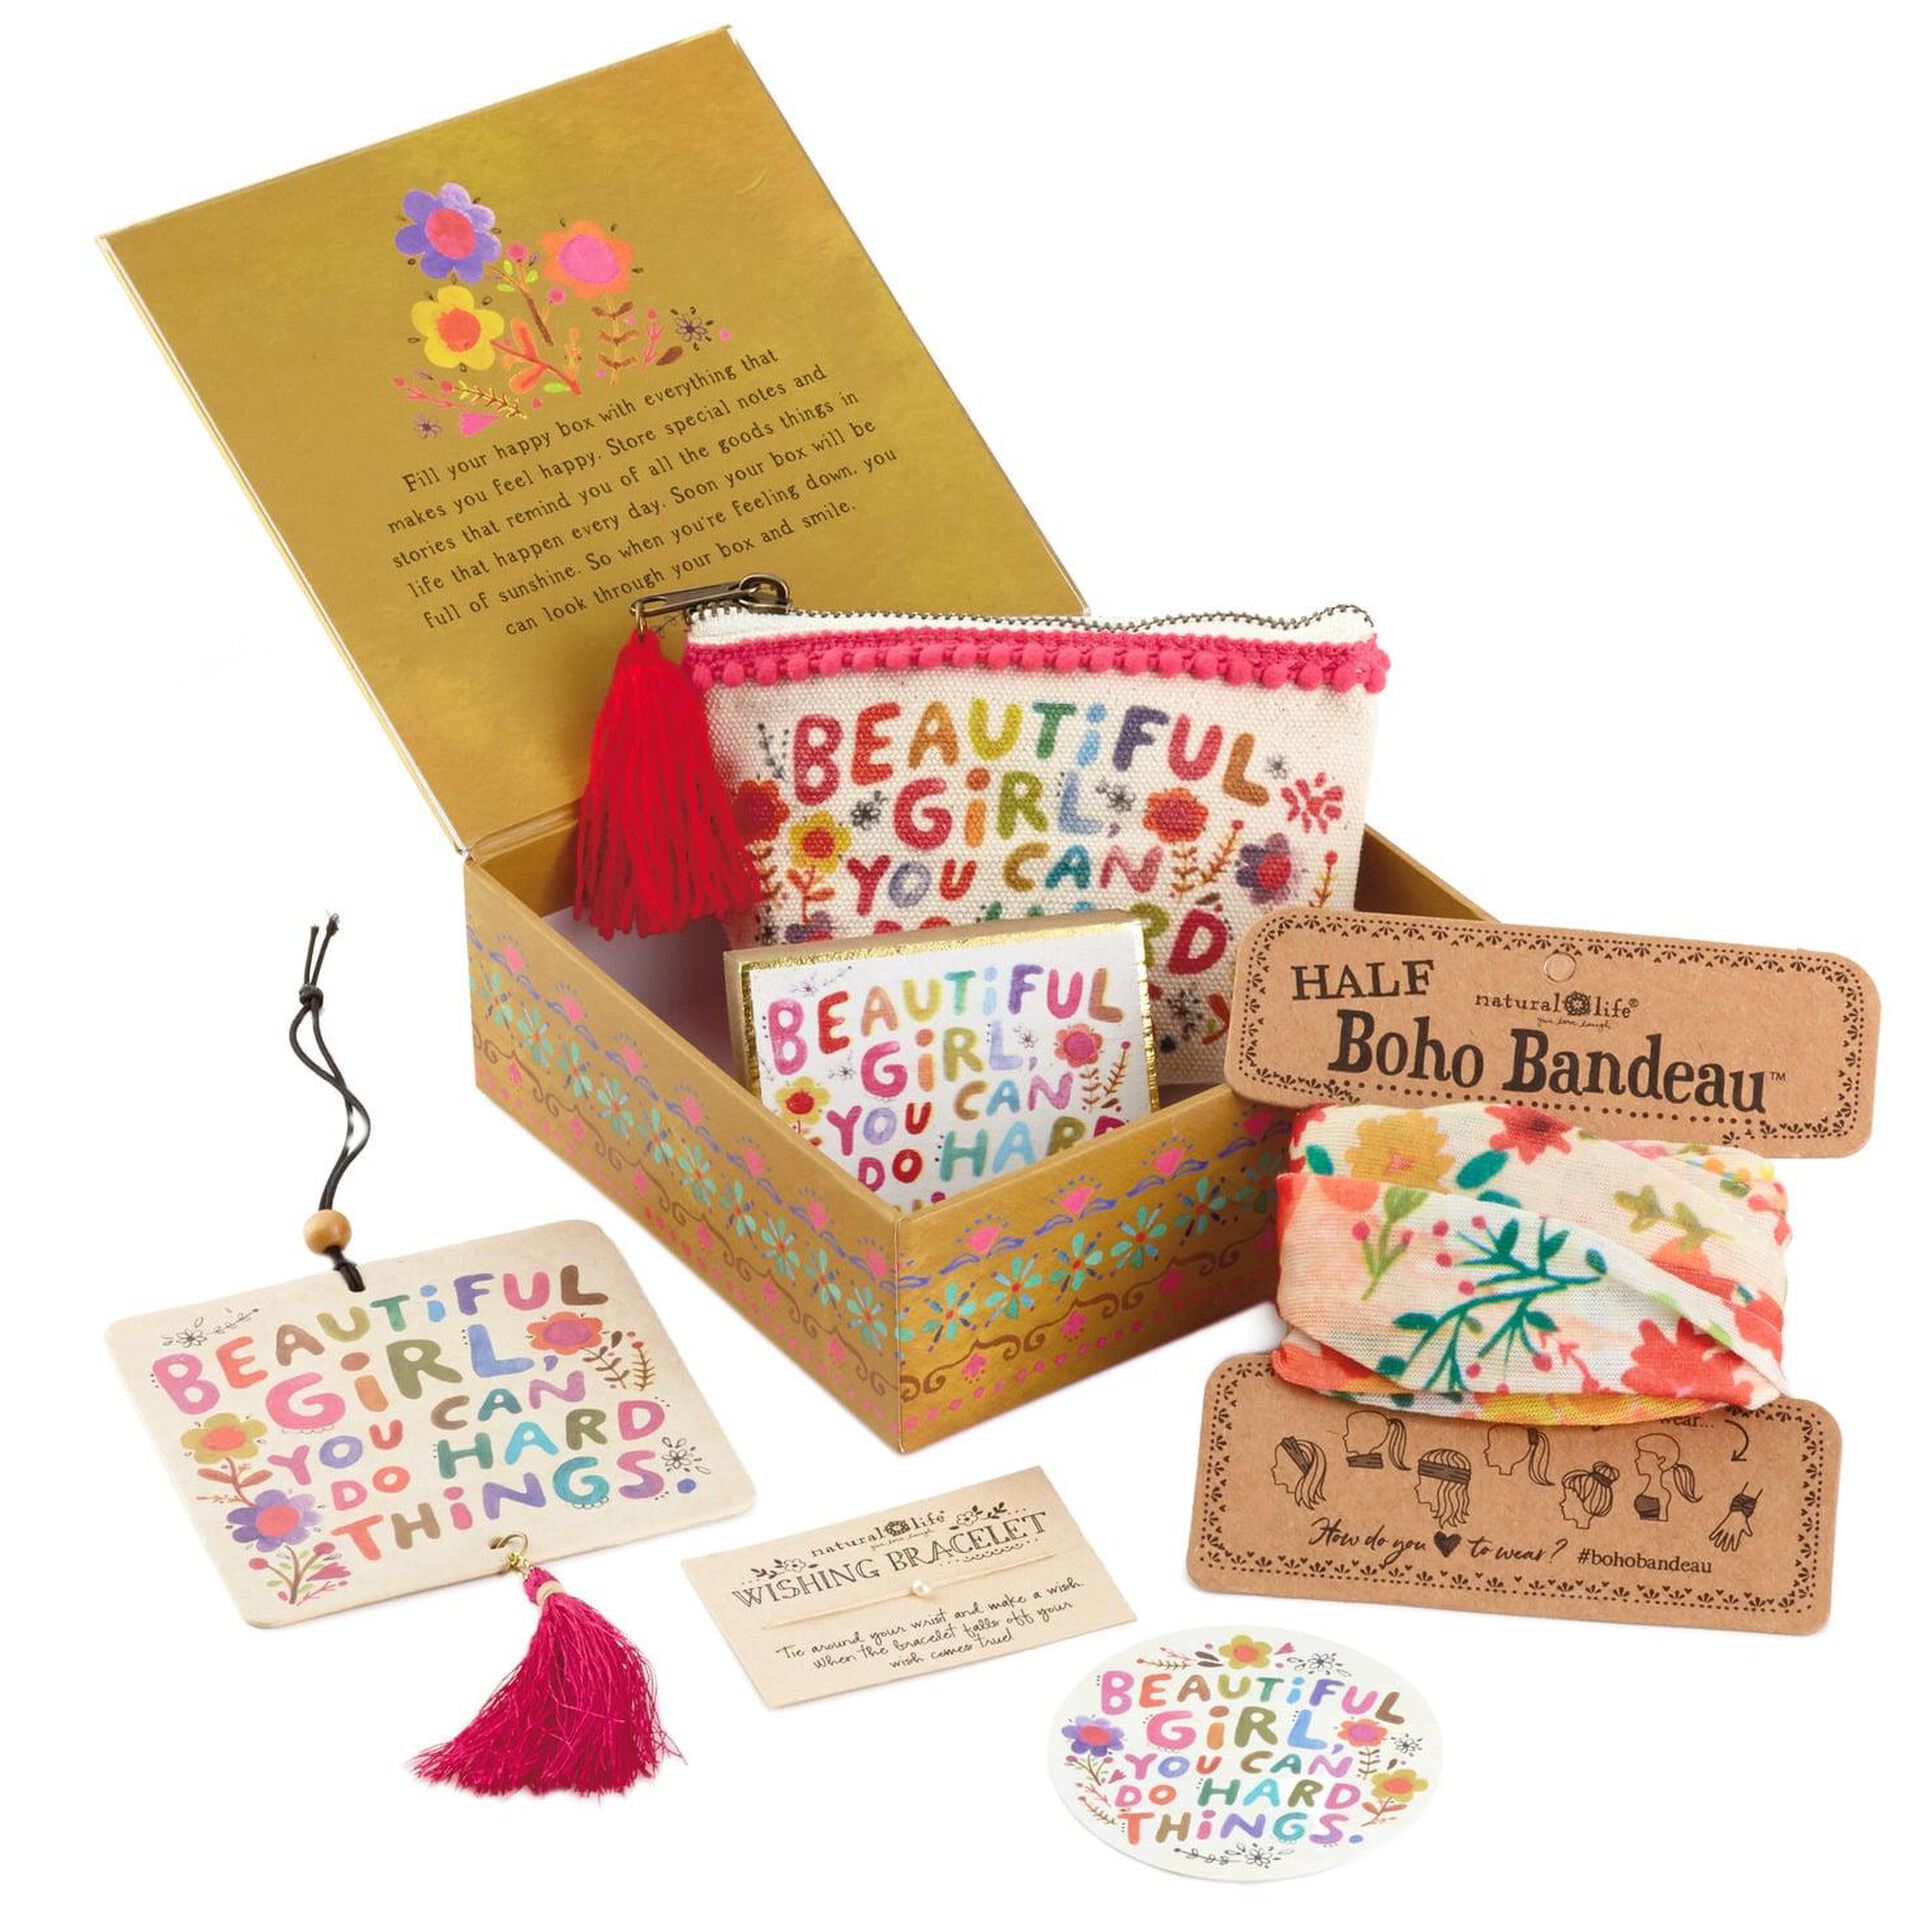 Natural Life Beautiful Girl Happy Box Gift Set 6 Pieces Trays Boxes Hallmark